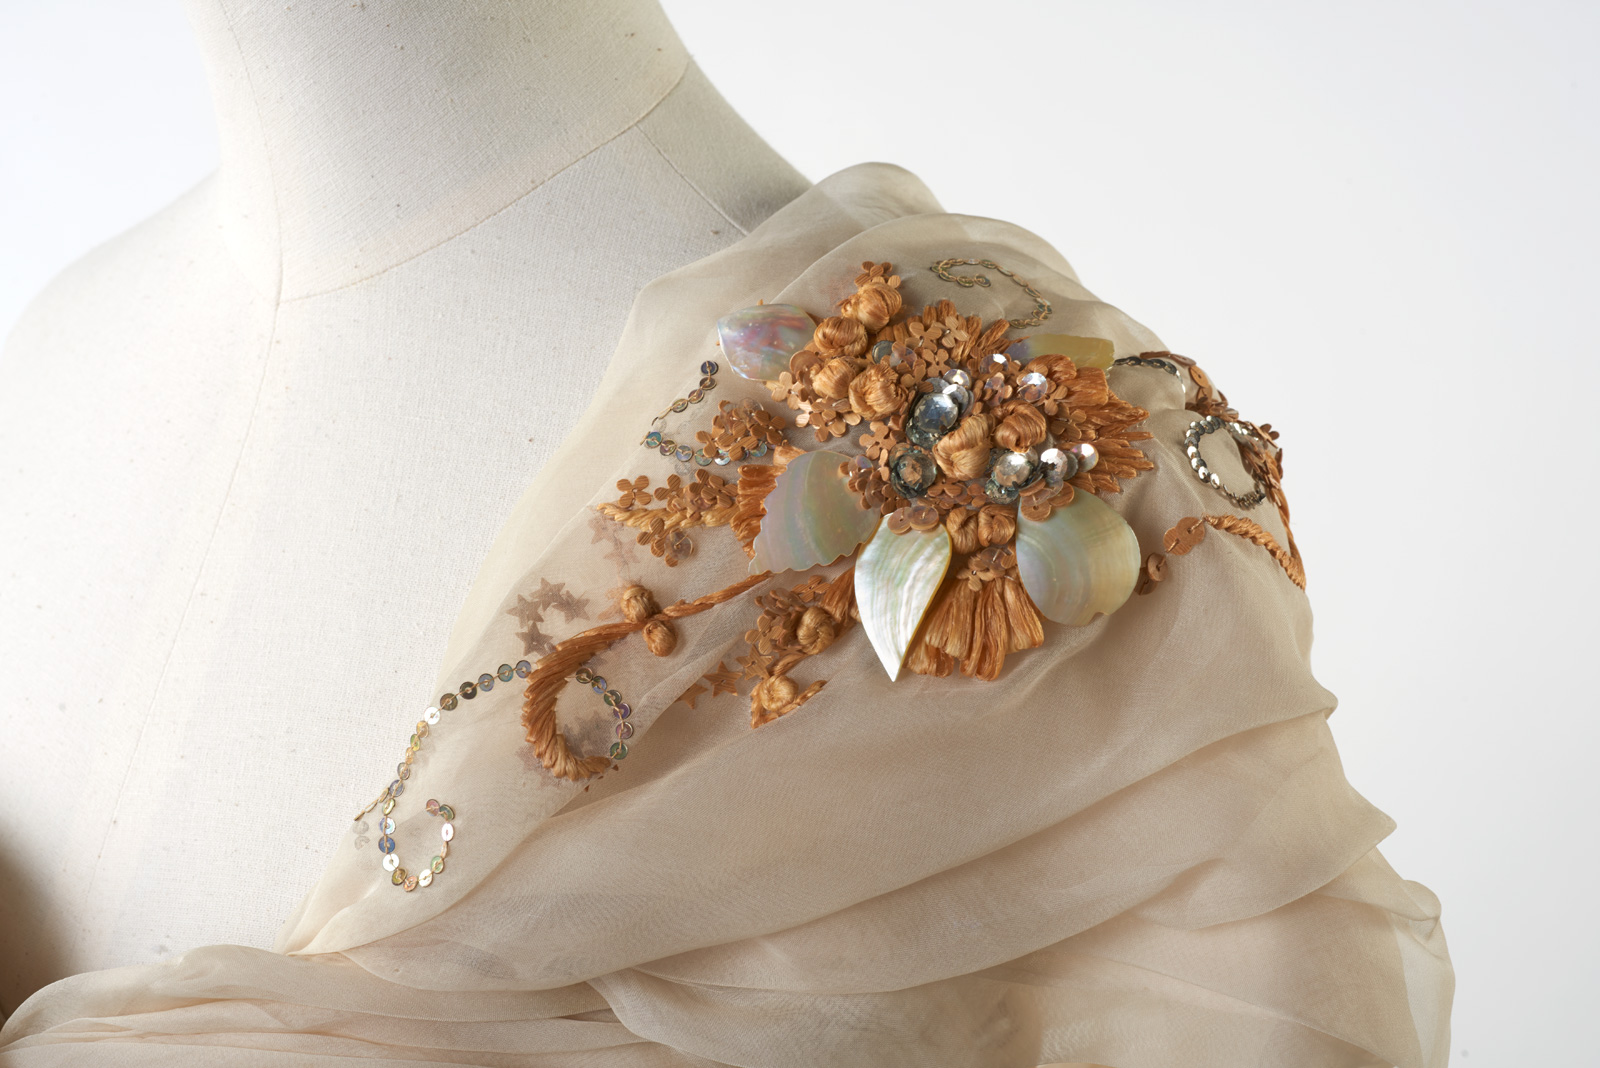 The decoration on Princess Margaret's Dior dress.